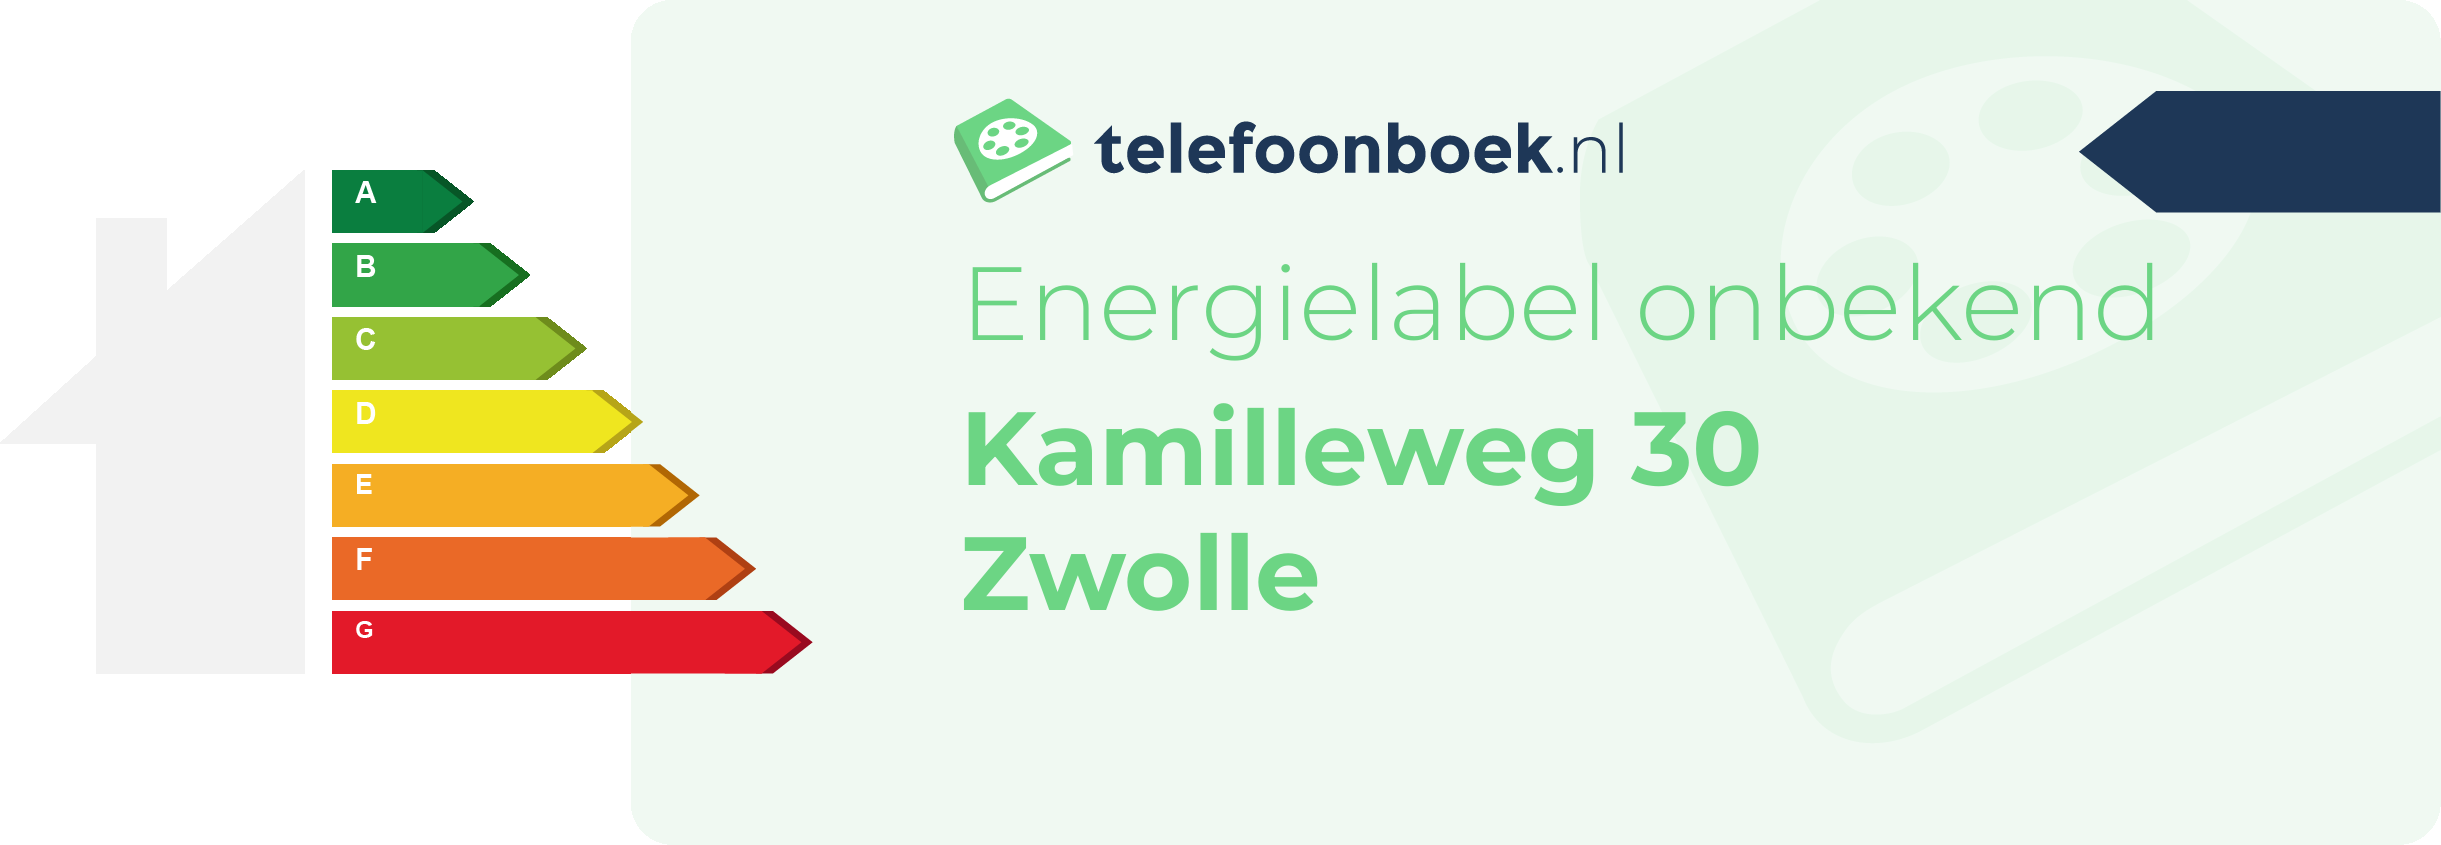 Energielabel Kamilleweg 30 Zwolle